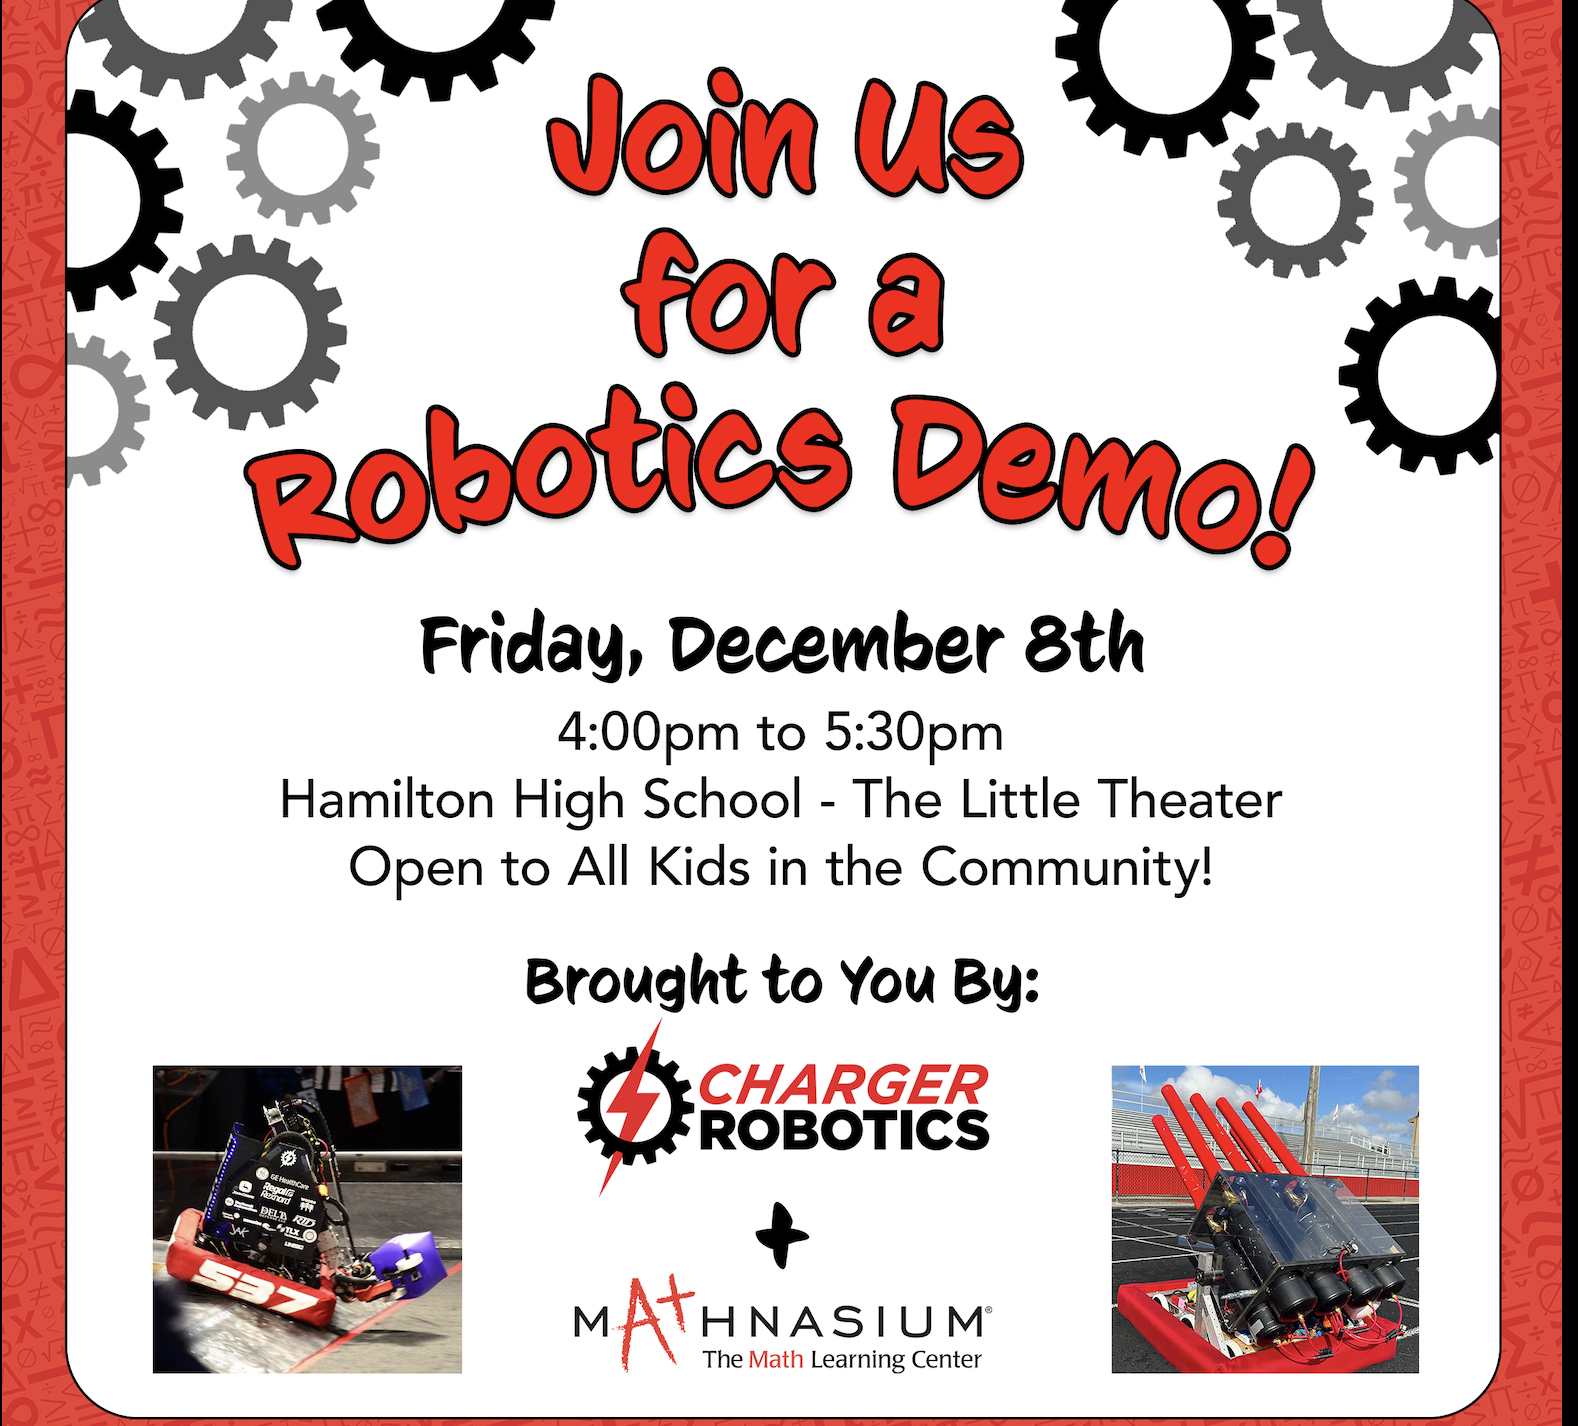 Robotics Demo at Hamilton High School